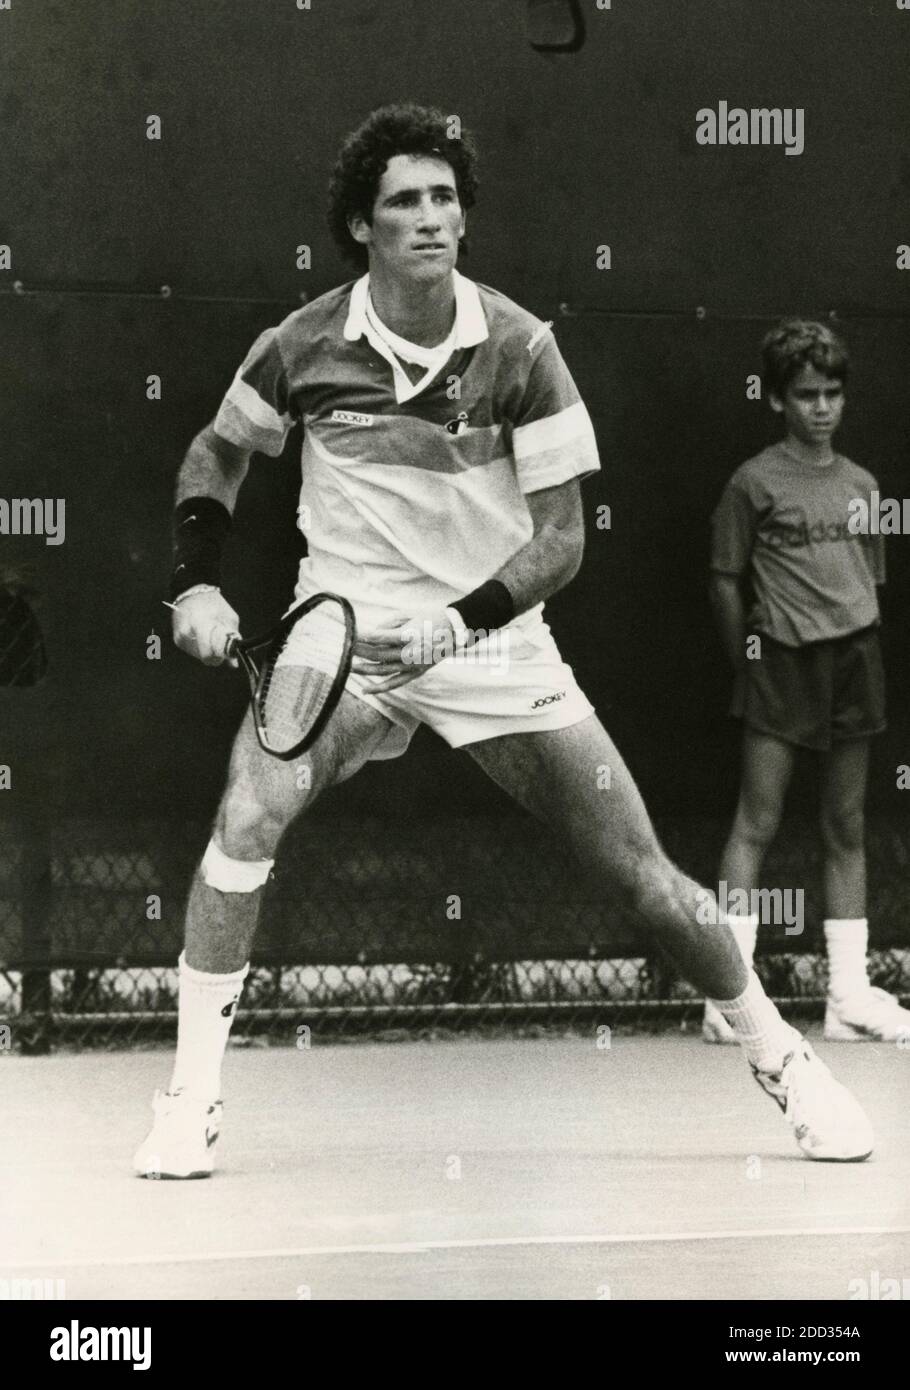 American tennis player Brad Gilbert, 1980s Stock Photo - Alamy